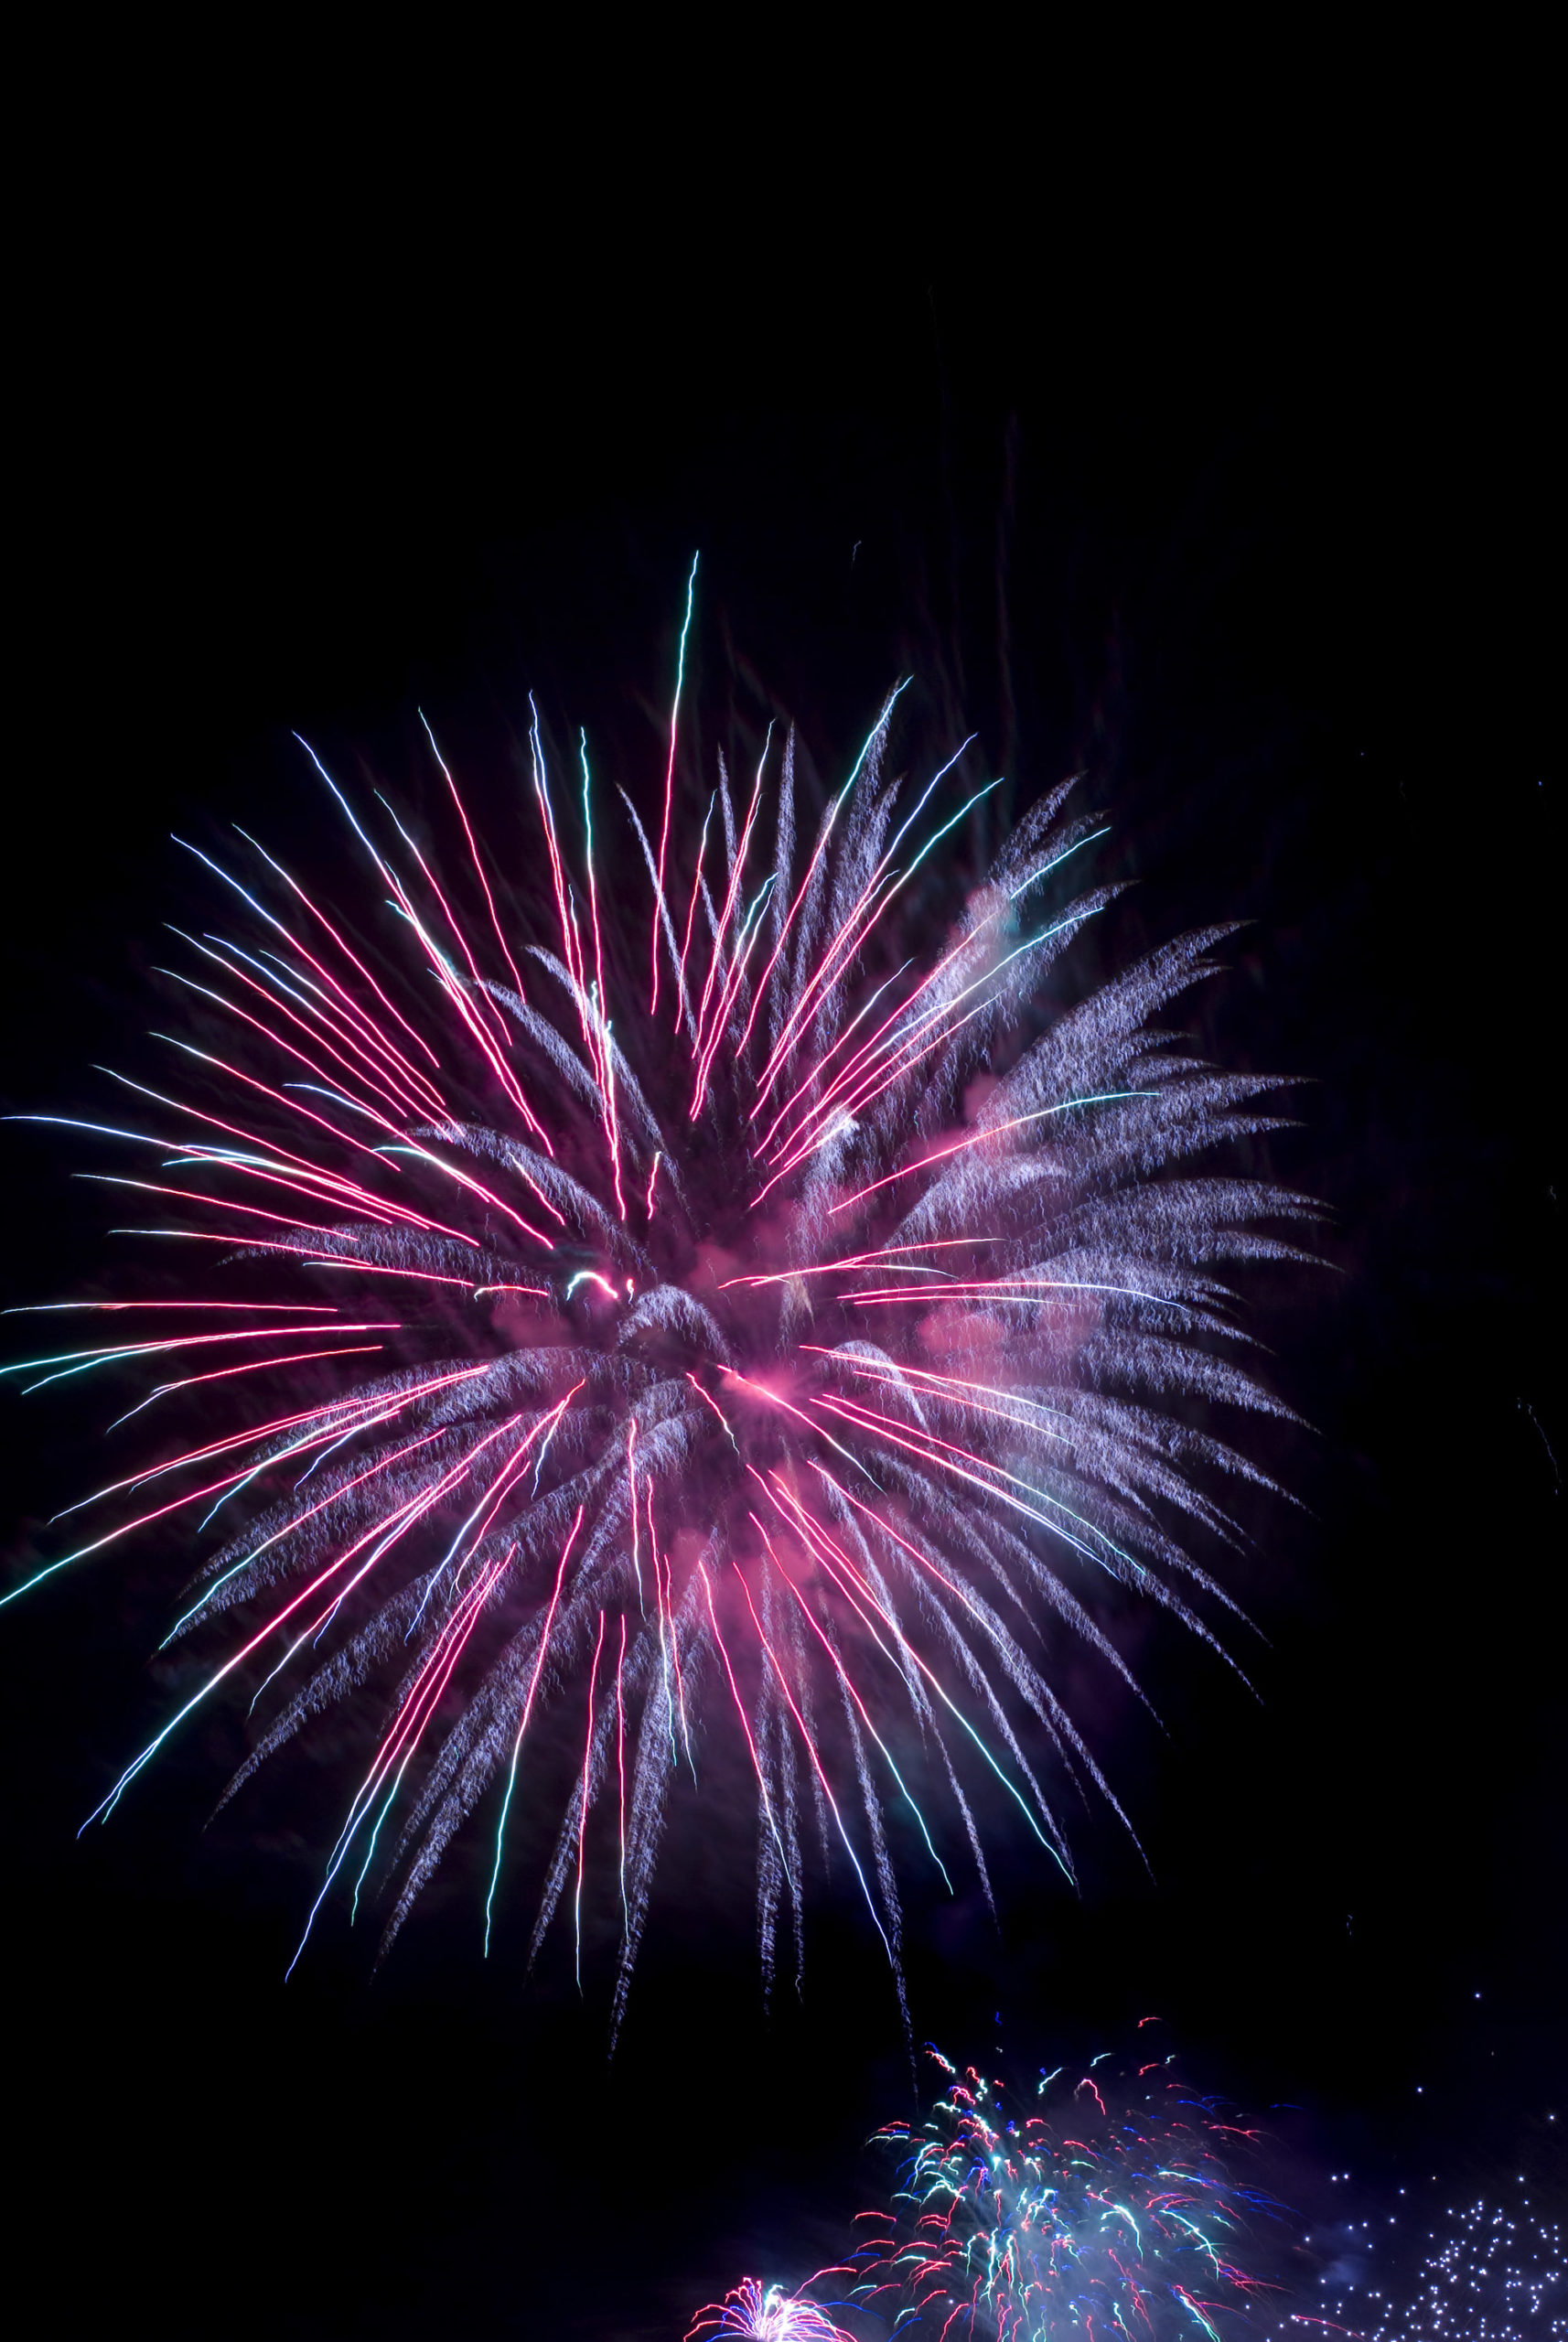 Image of fireworks downloaded from http://christmasstockimages.com/free/new_year/slides/fireworks_skyburst.htm